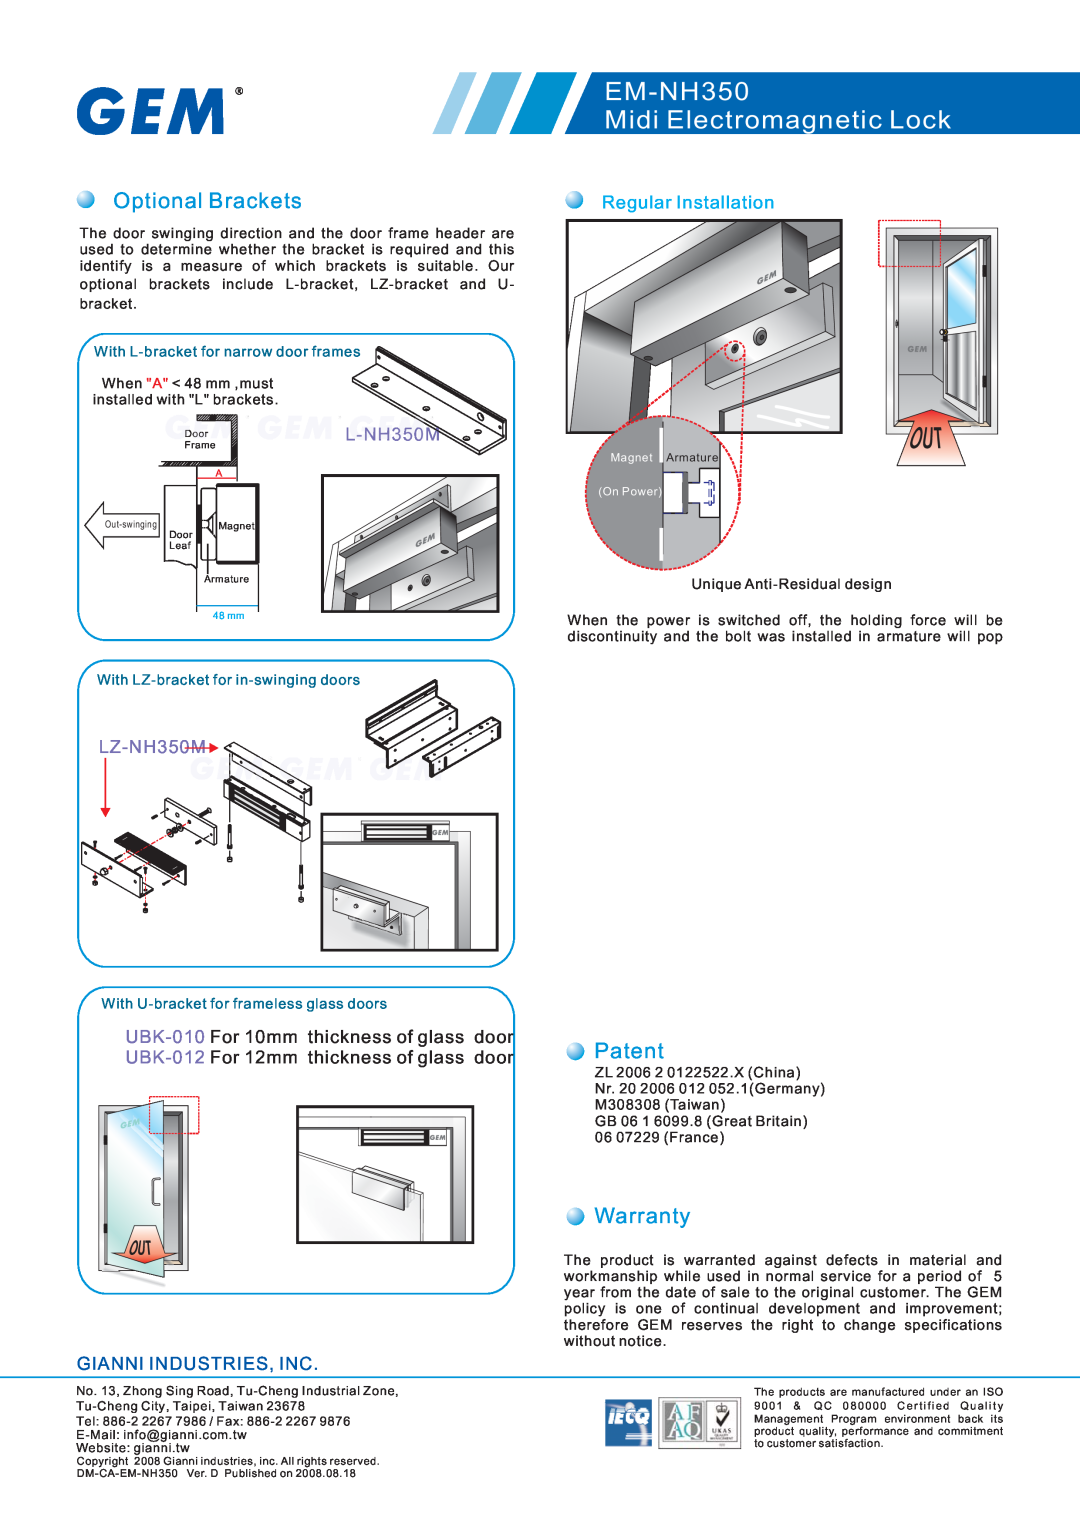 Gianni Industries Optional Brackets, Patent, Warranty, EM-NH350 Midi Electromagnetic Lock, Regular Installation 